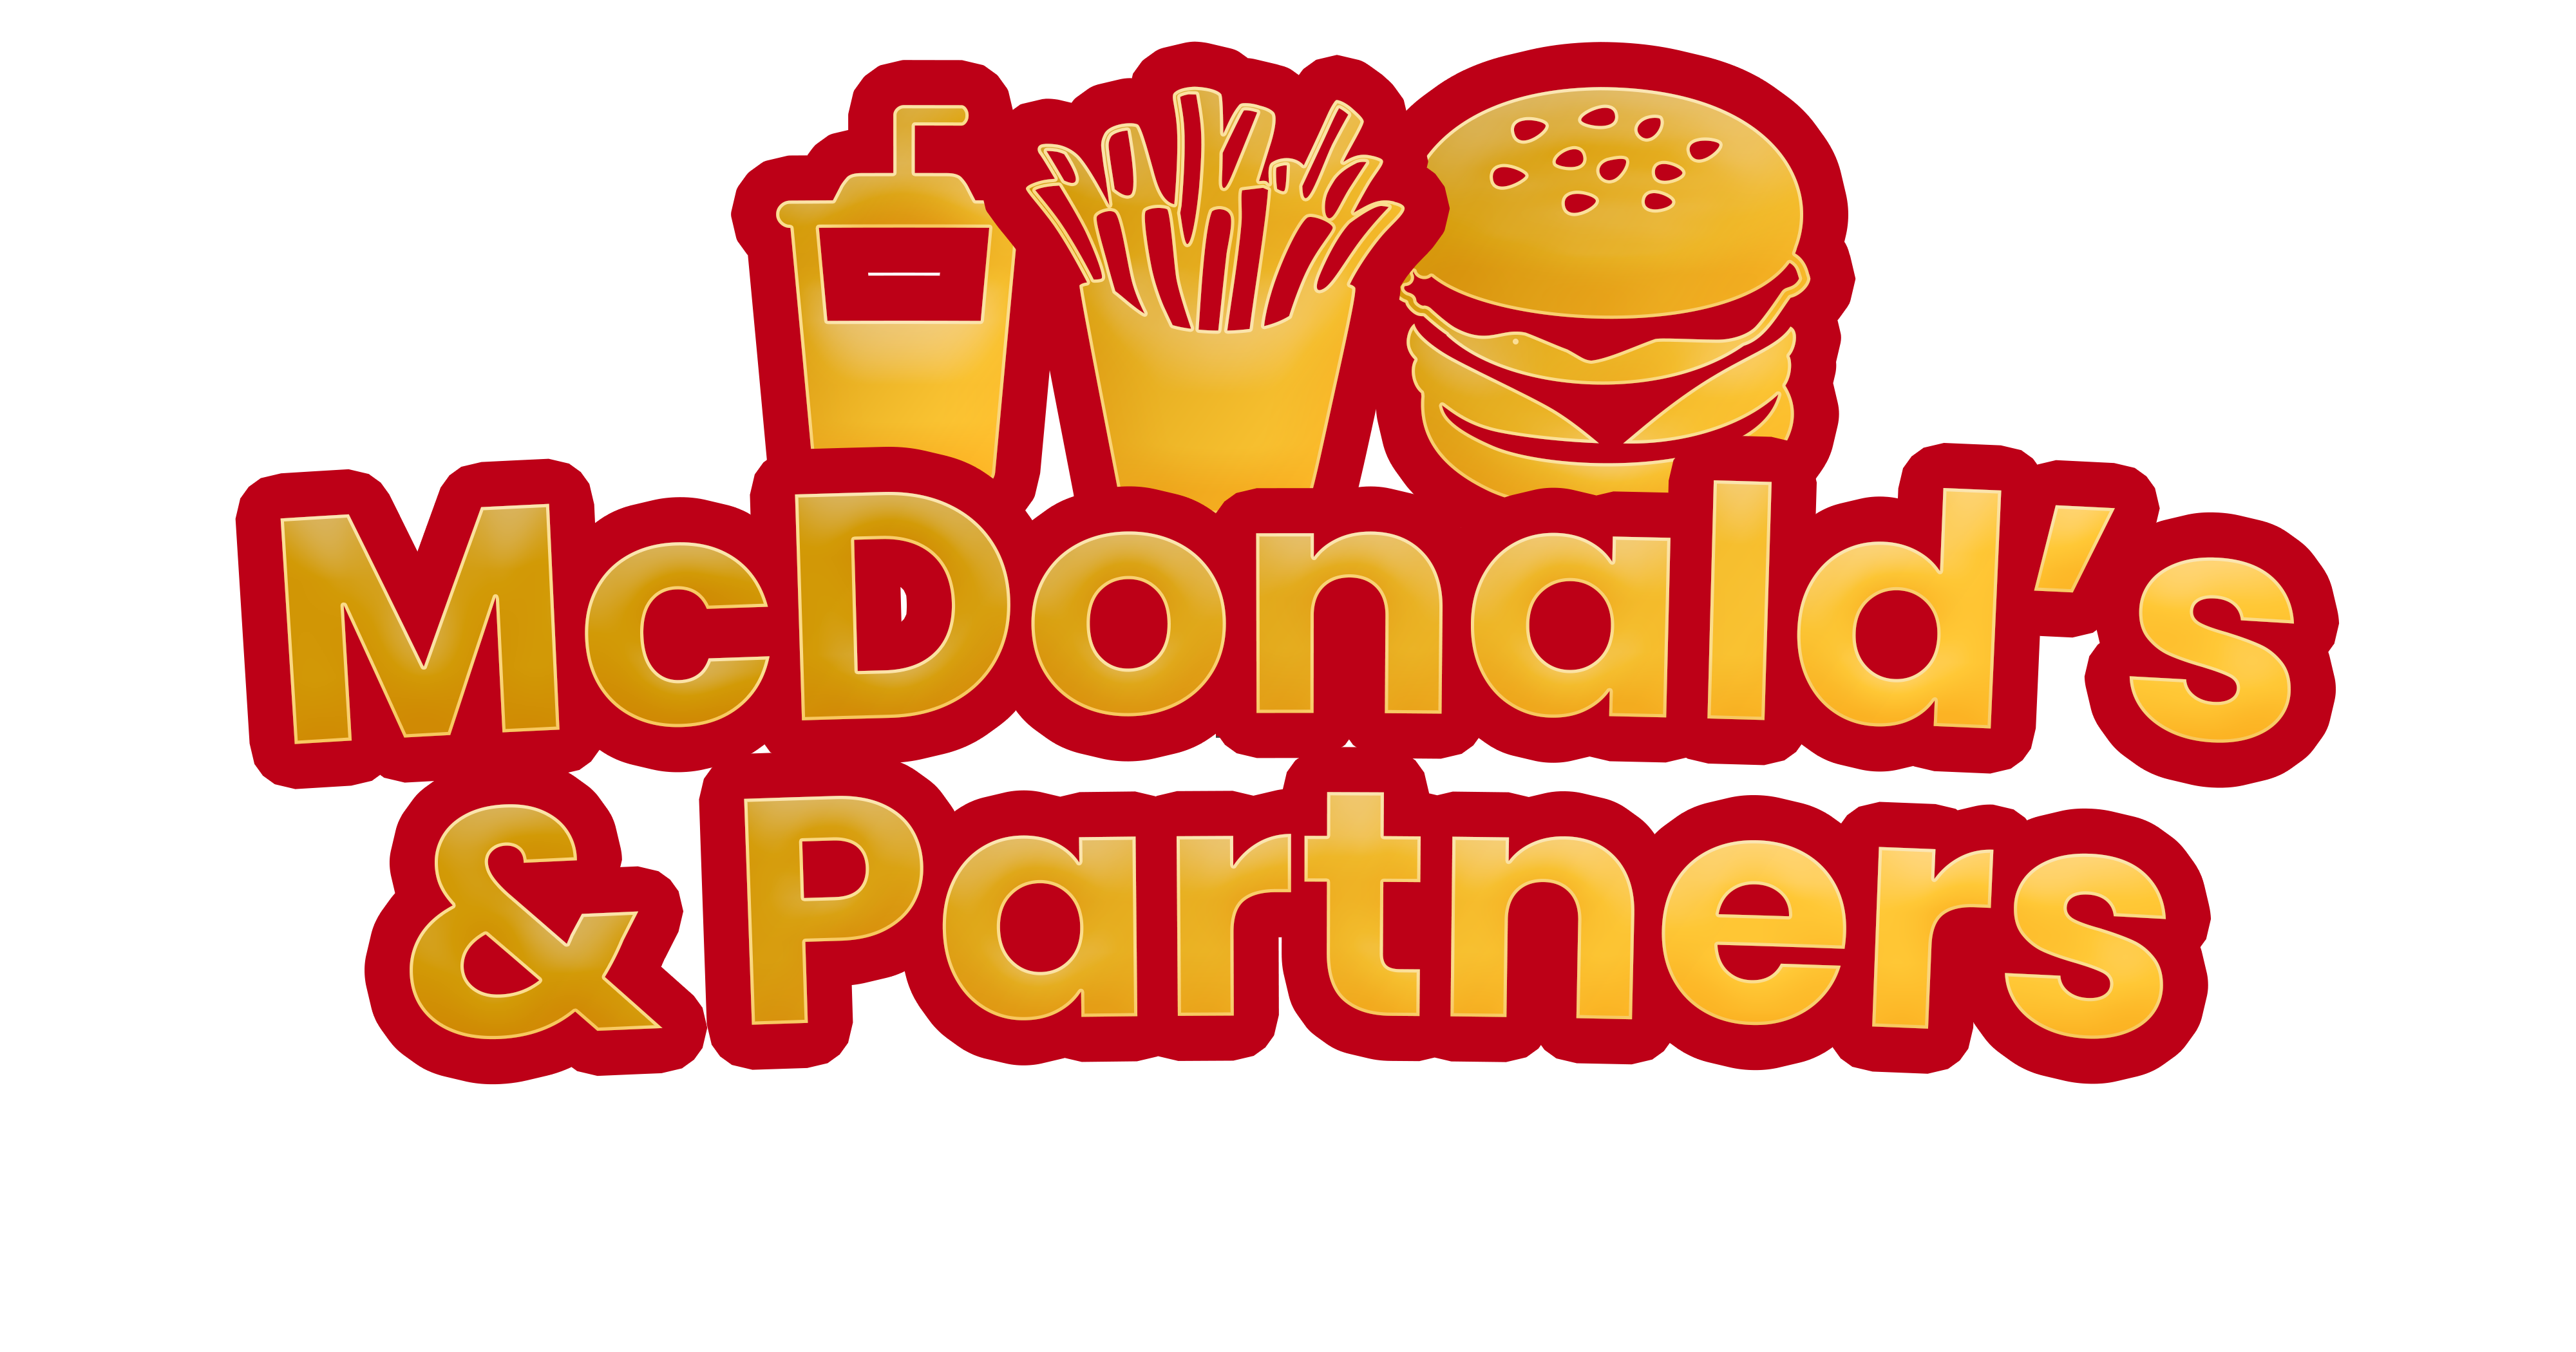 McDonald's & Partners